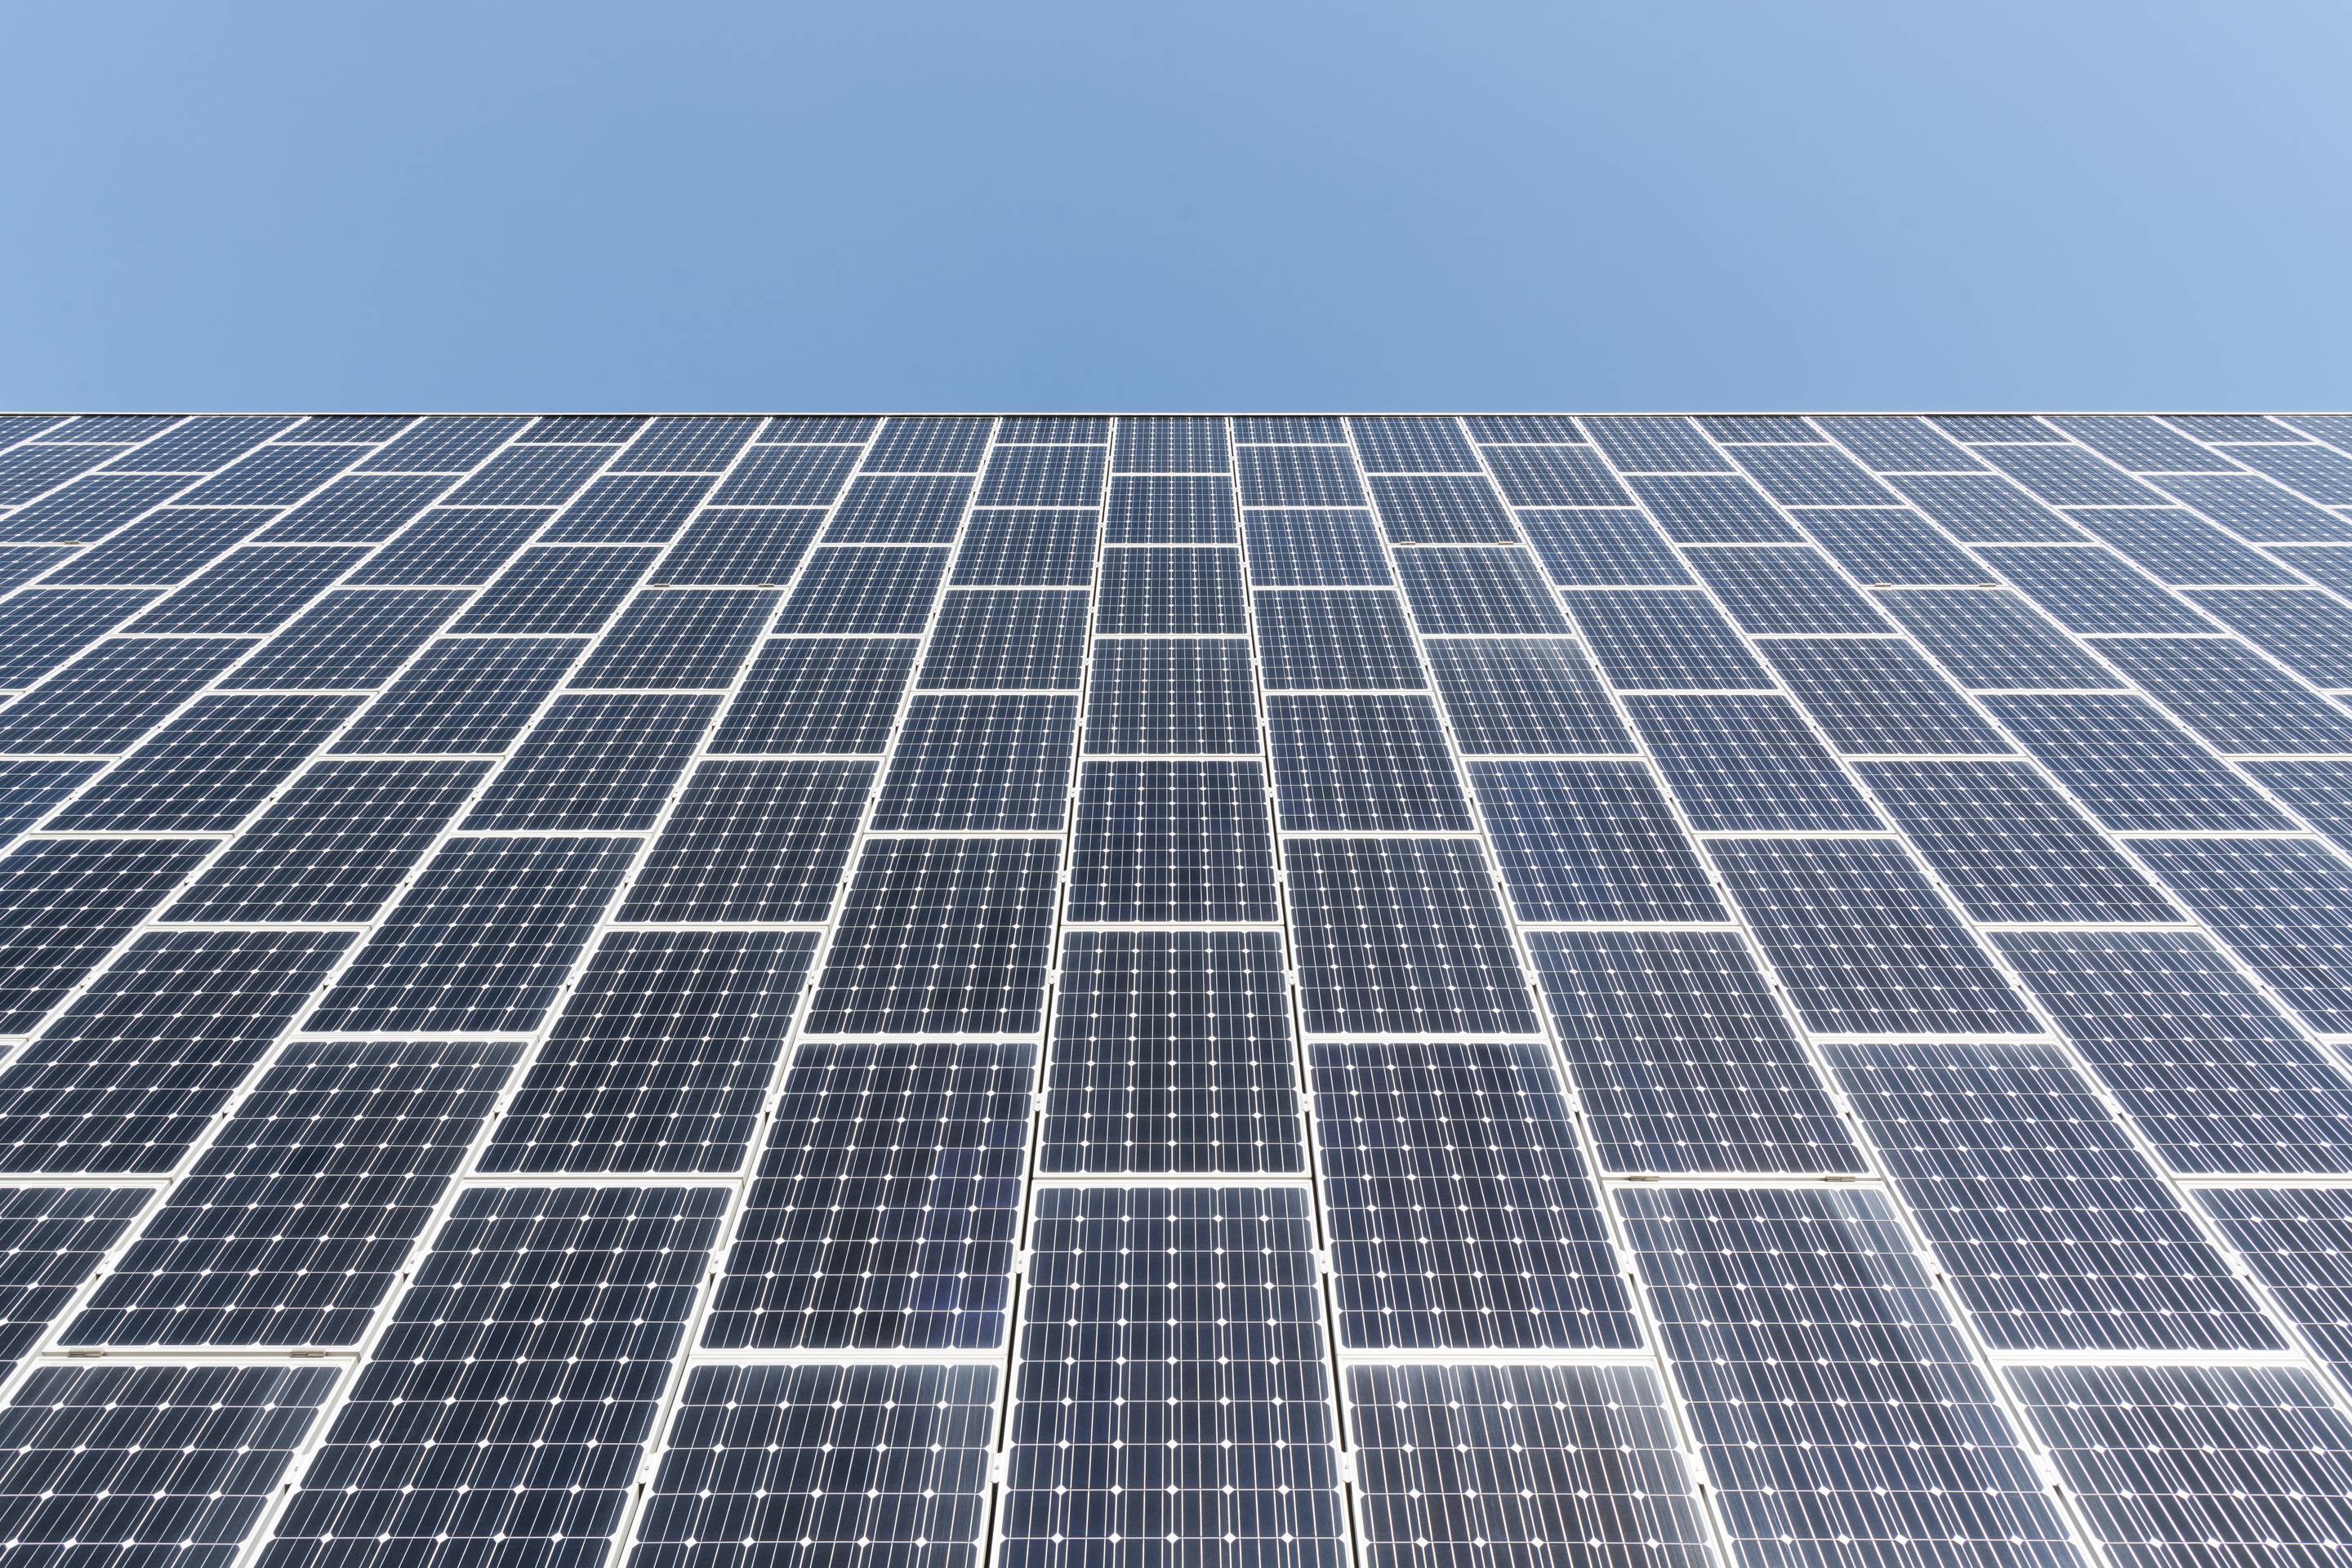 Green Datacenter Solar panels